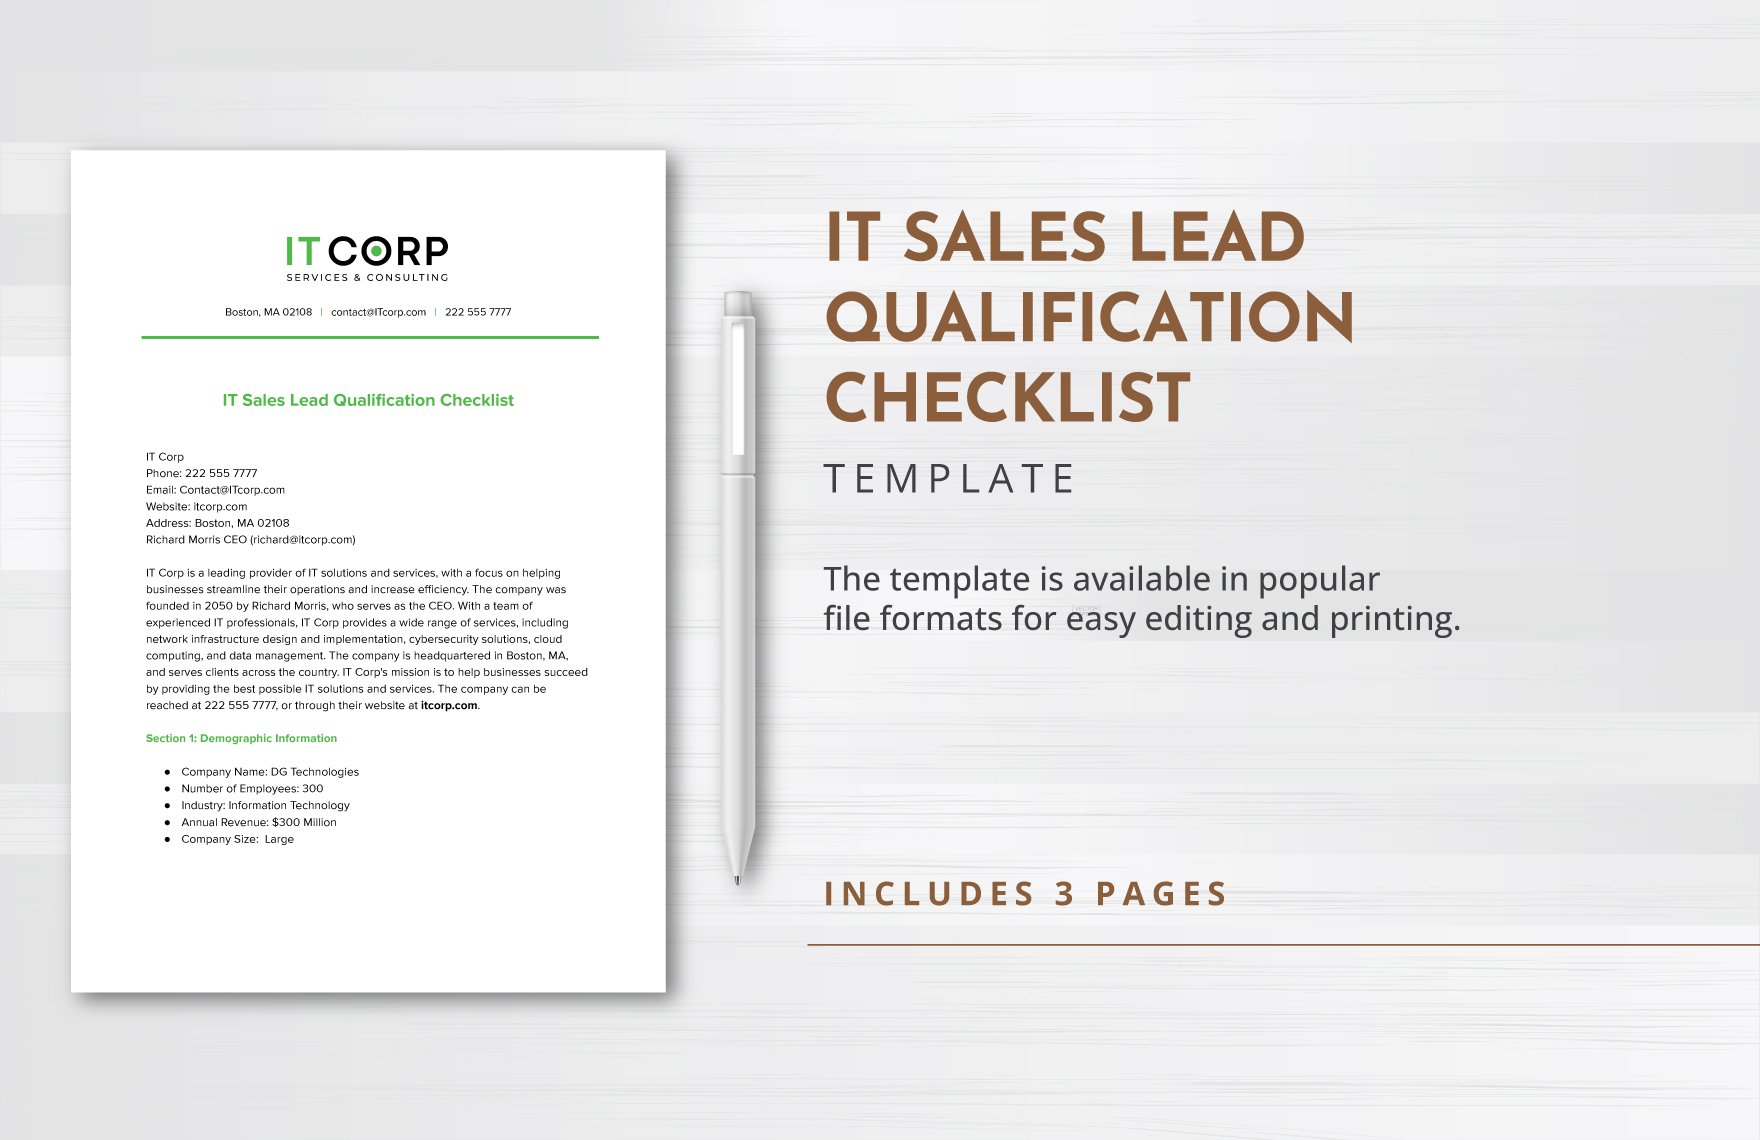 IT Sales Lead Qualification Checklist Template